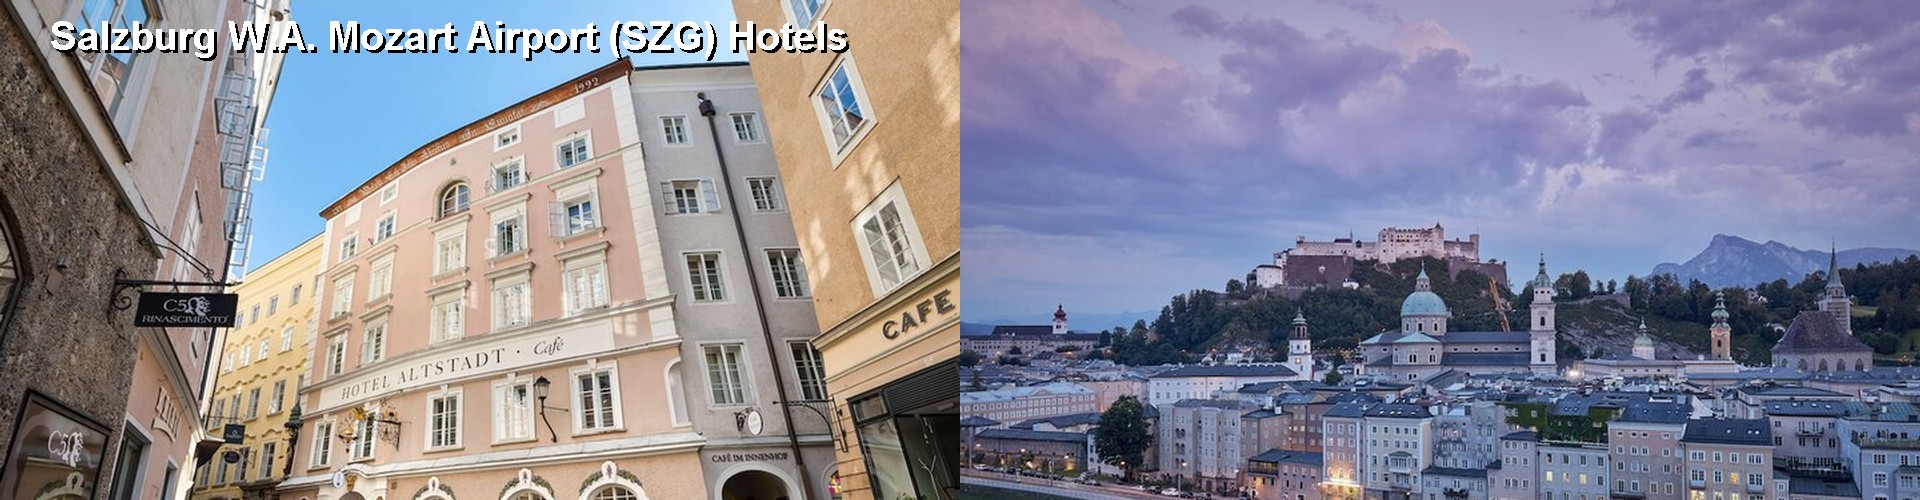 5 Best Hotels near Salzburg W.A. Mozart Airport (SZG)